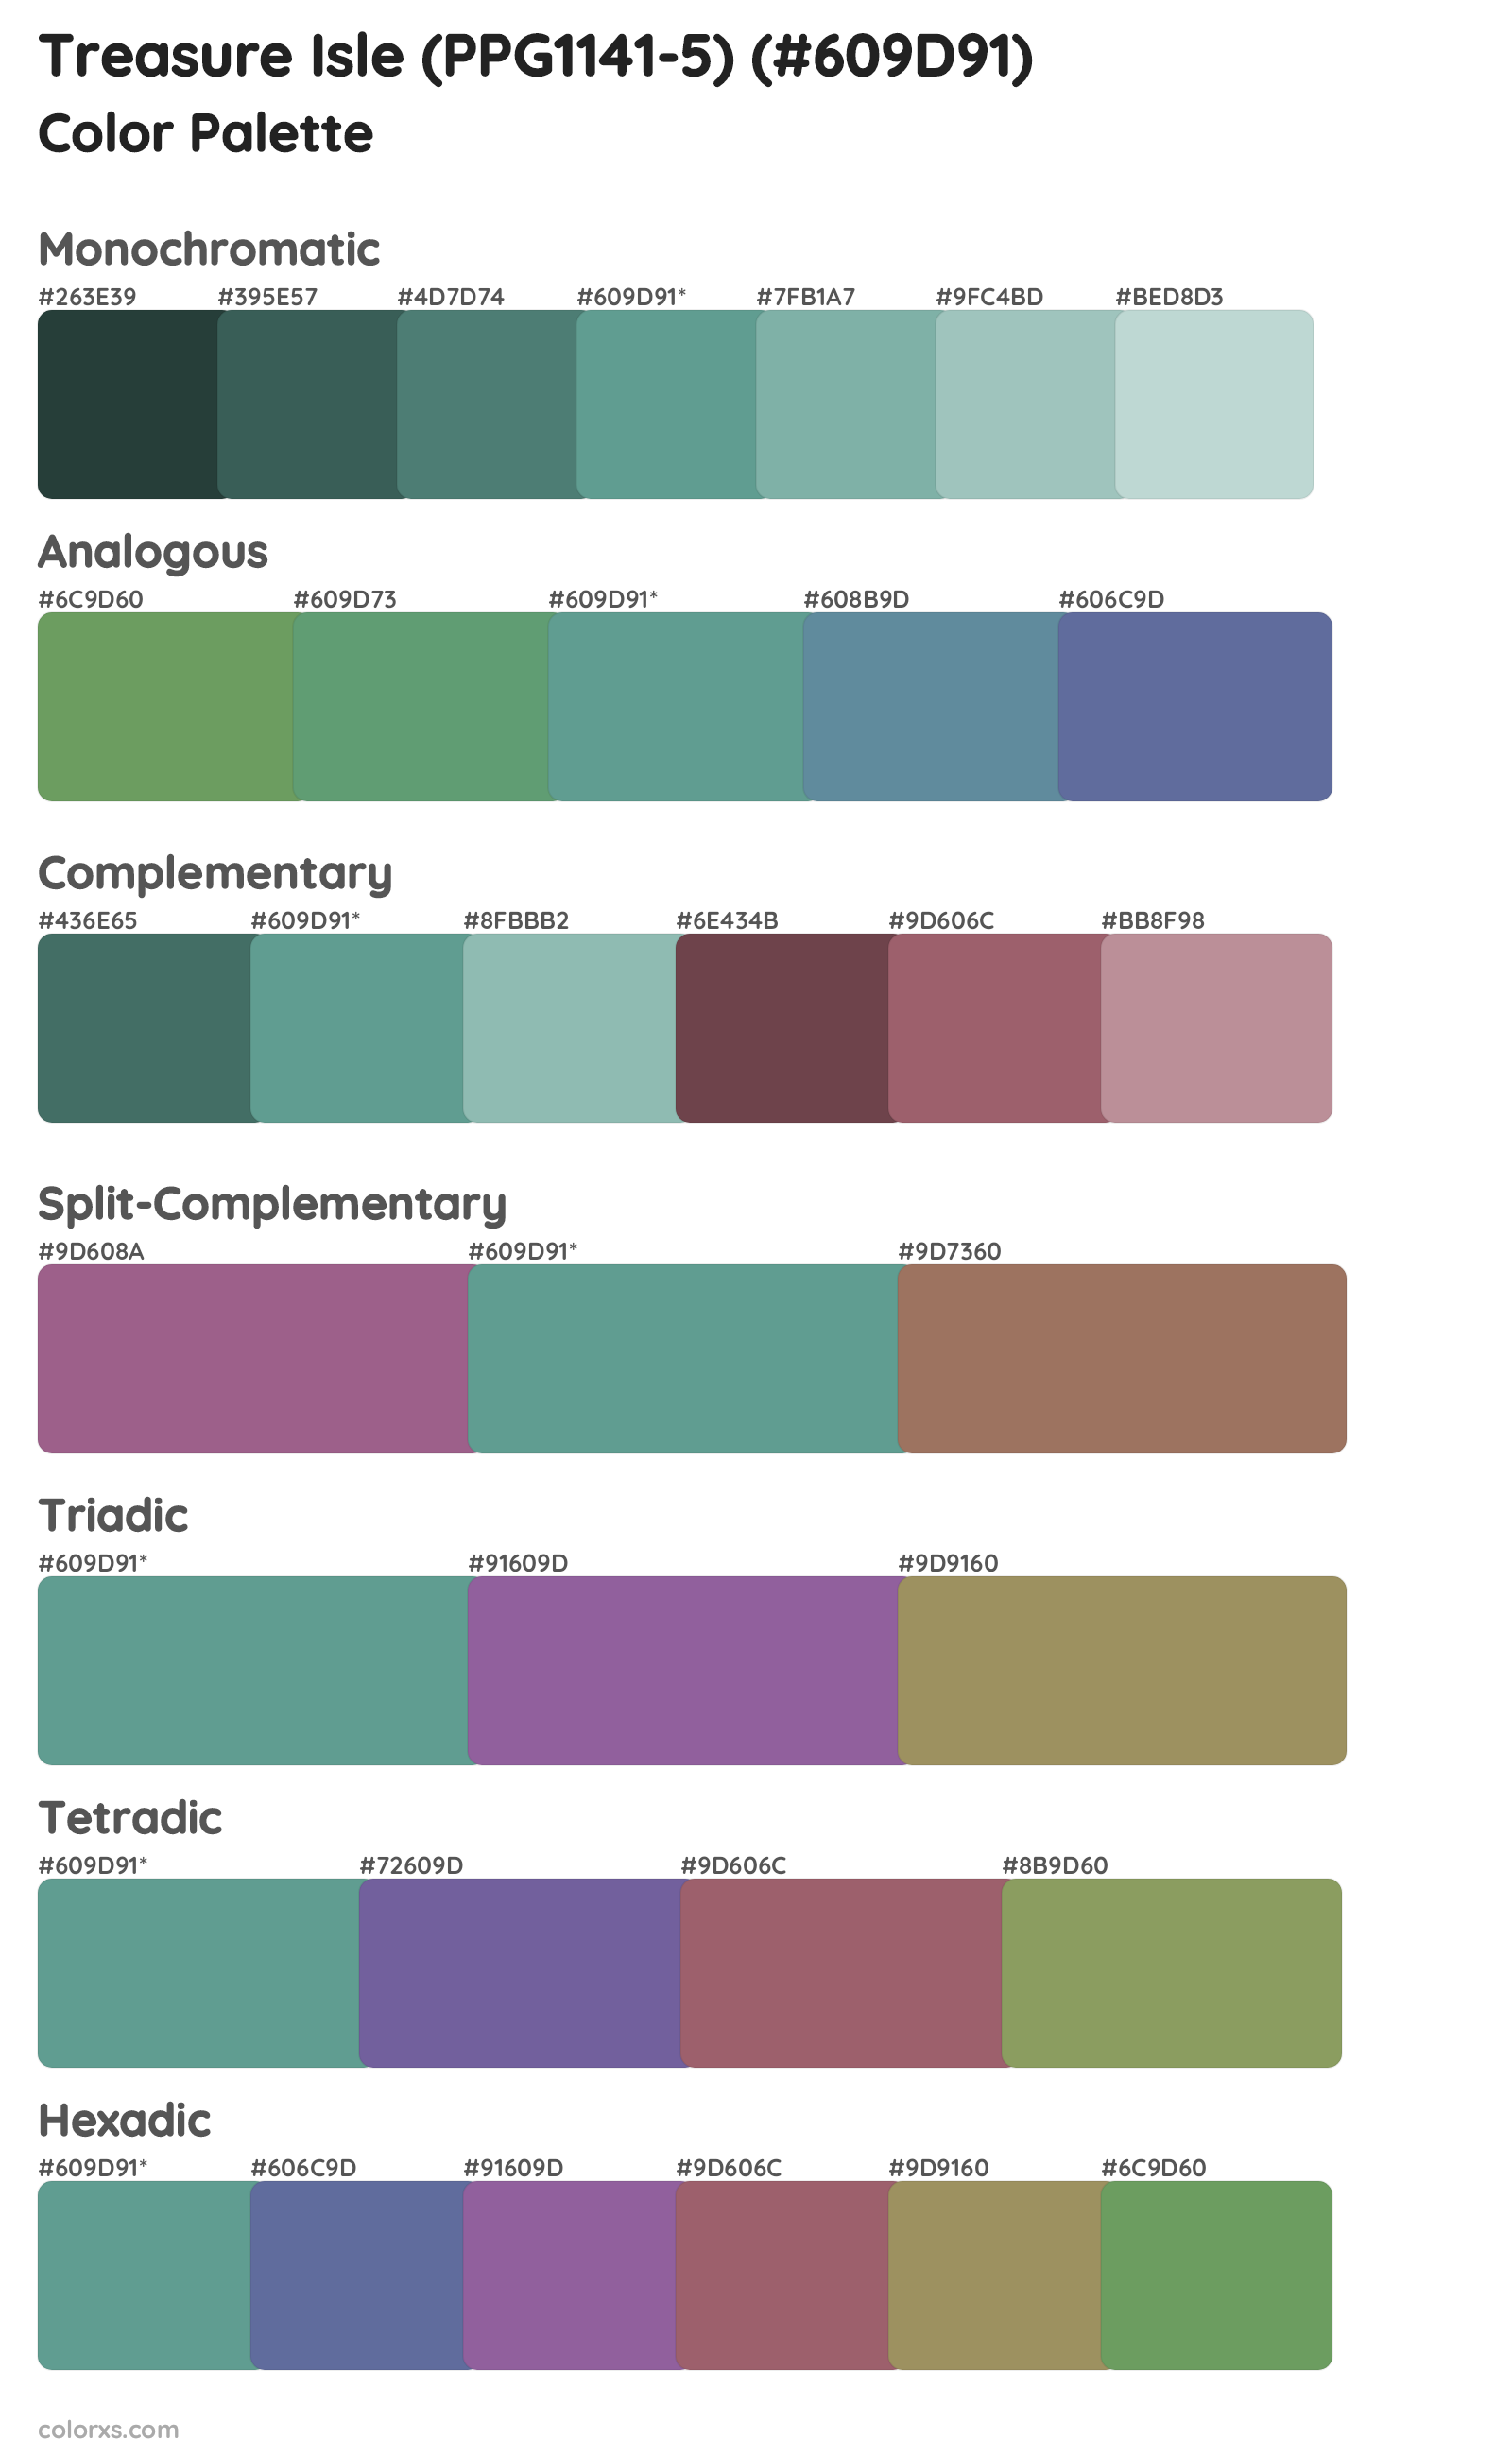 Treasure Isle (PPG1141-5) Color Scheme Palettes